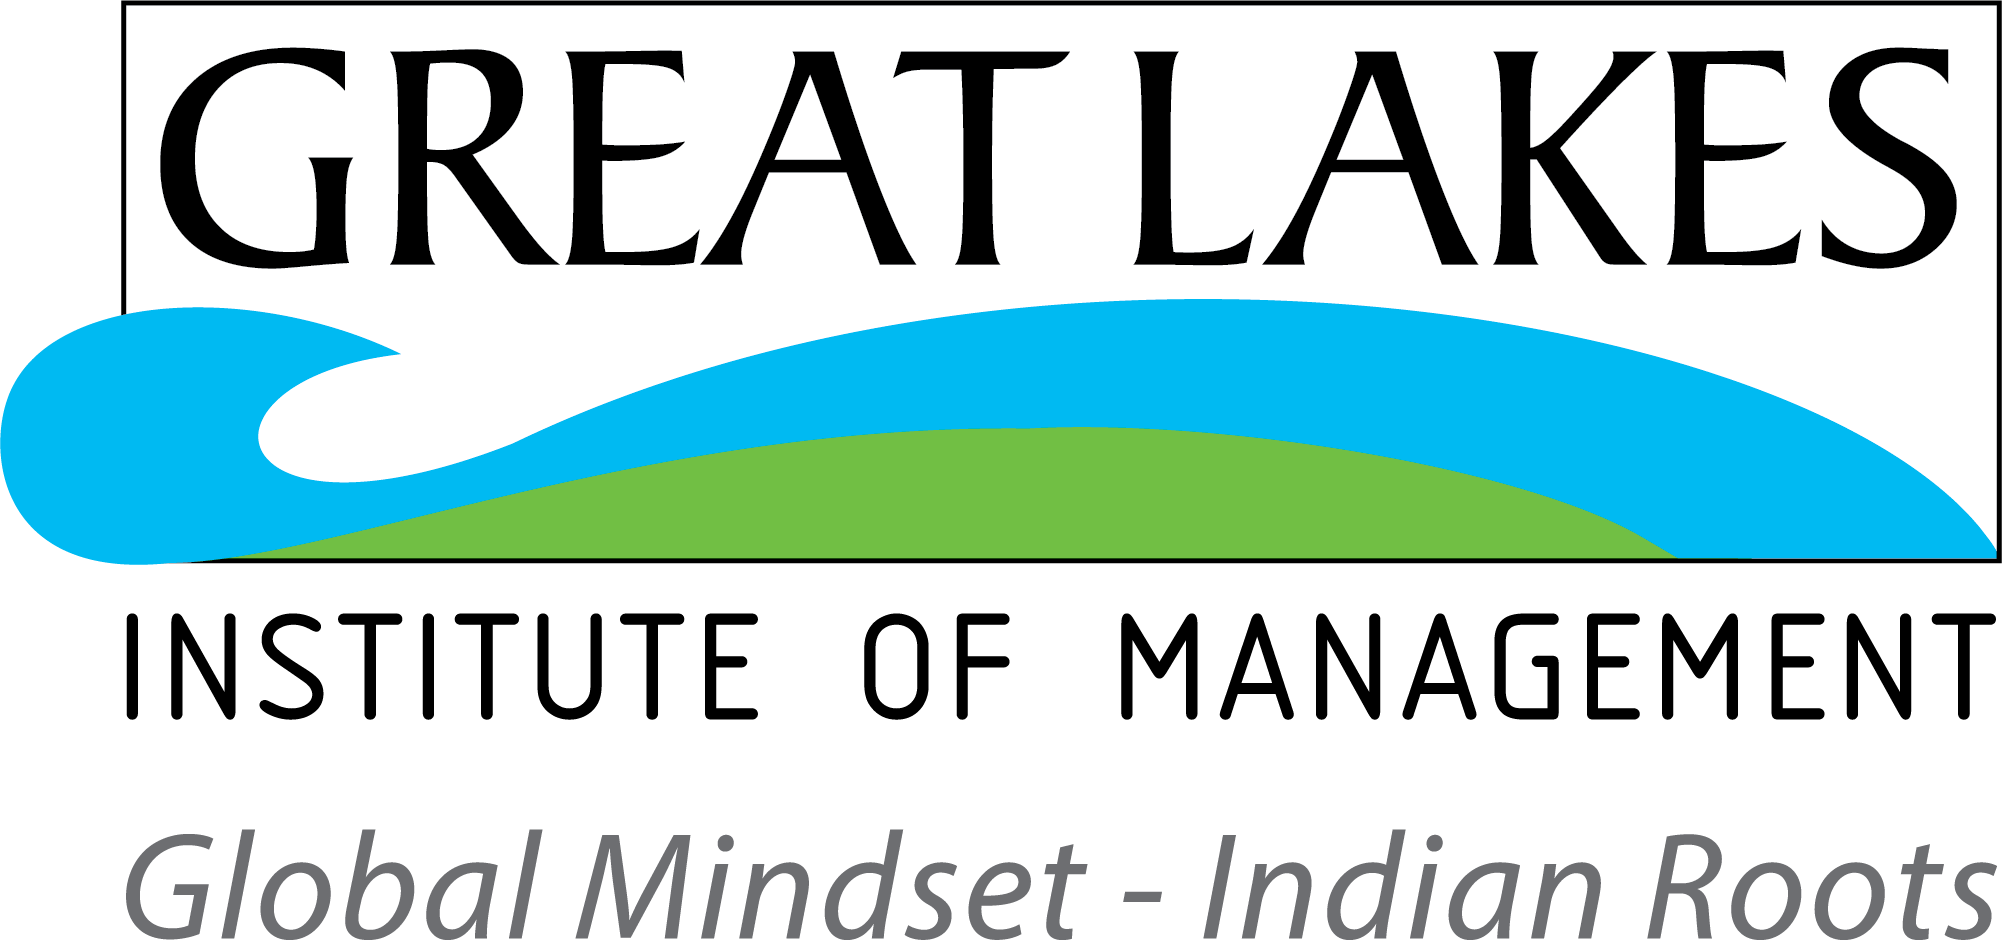 Great Lakes Institute Logo